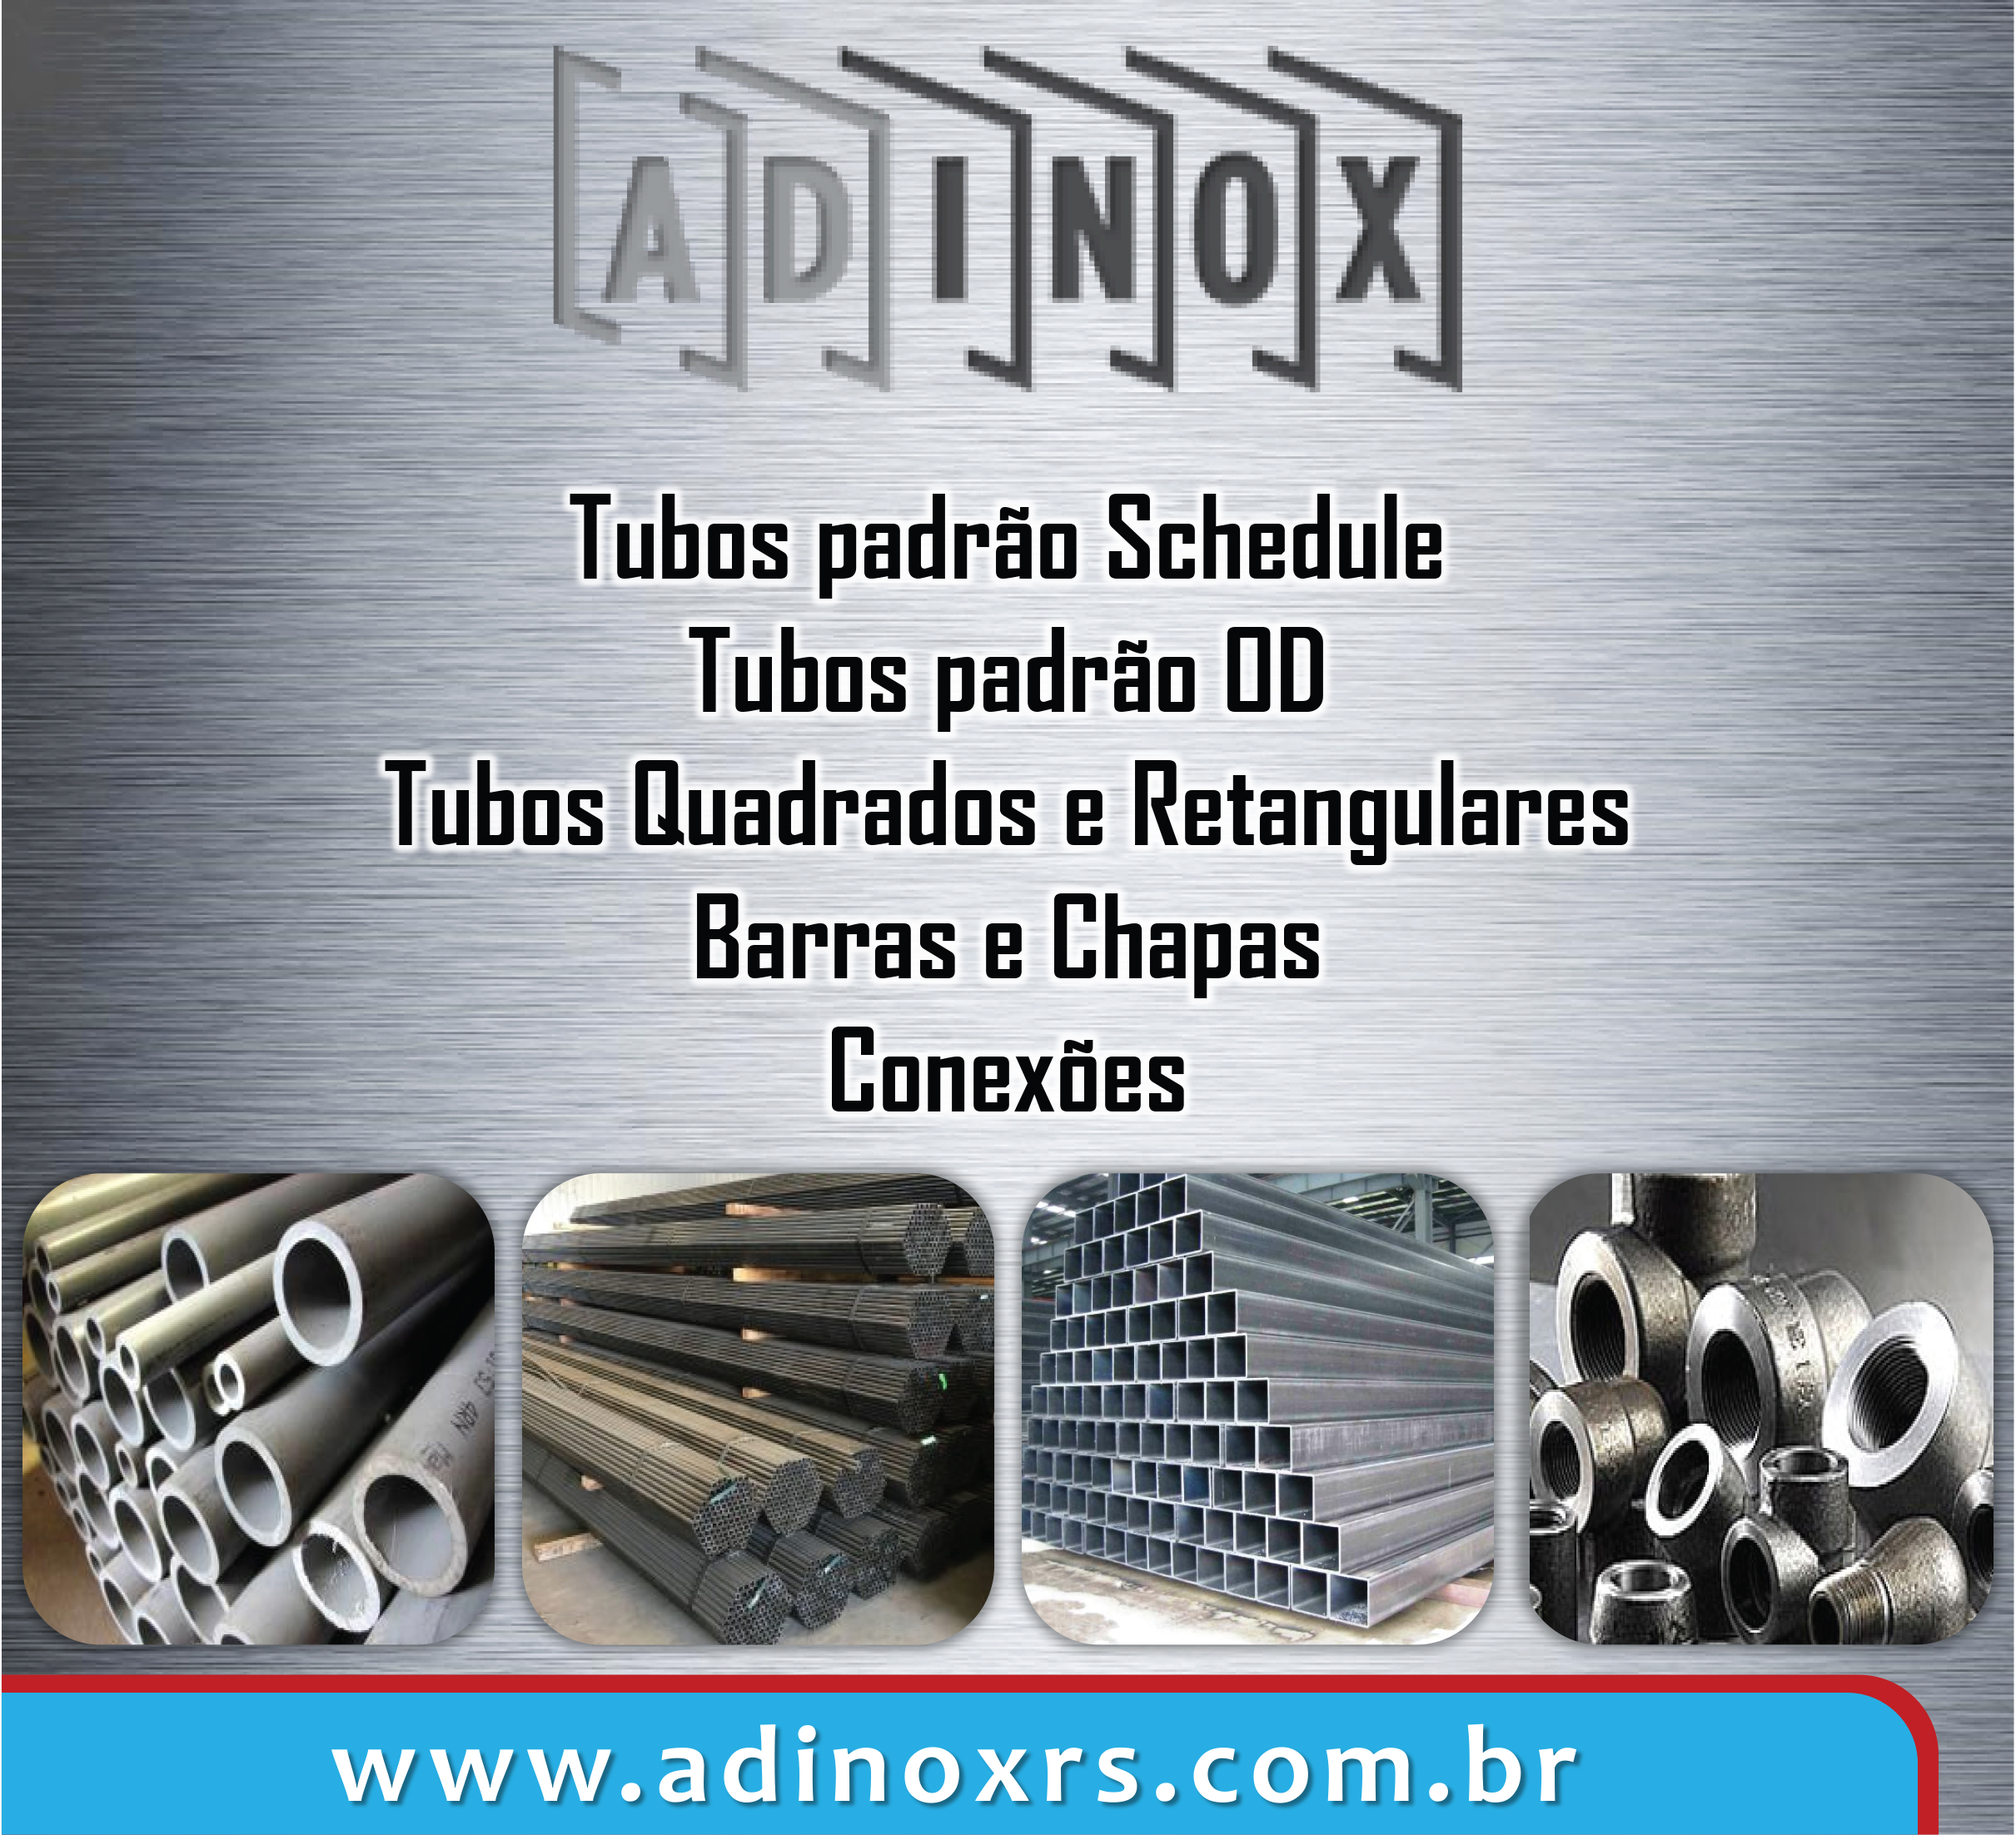 Adinox Tubos Schedule